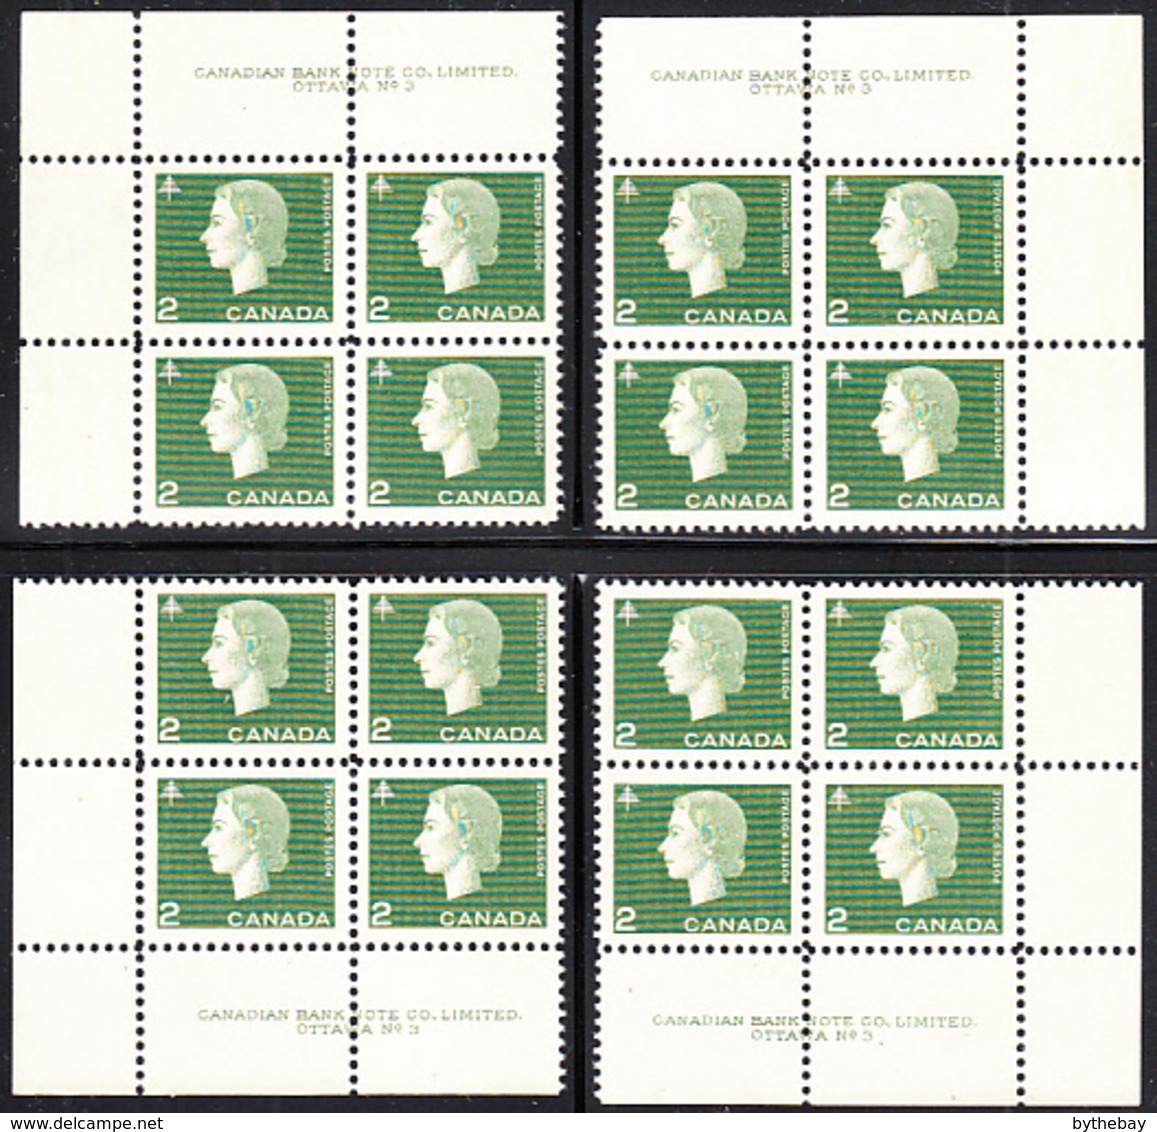 Canada 1963 MNH Sc #402 2c QEII Cameo Plate #3 Set Of 4 Blocks - Plate Number & Inscriptions